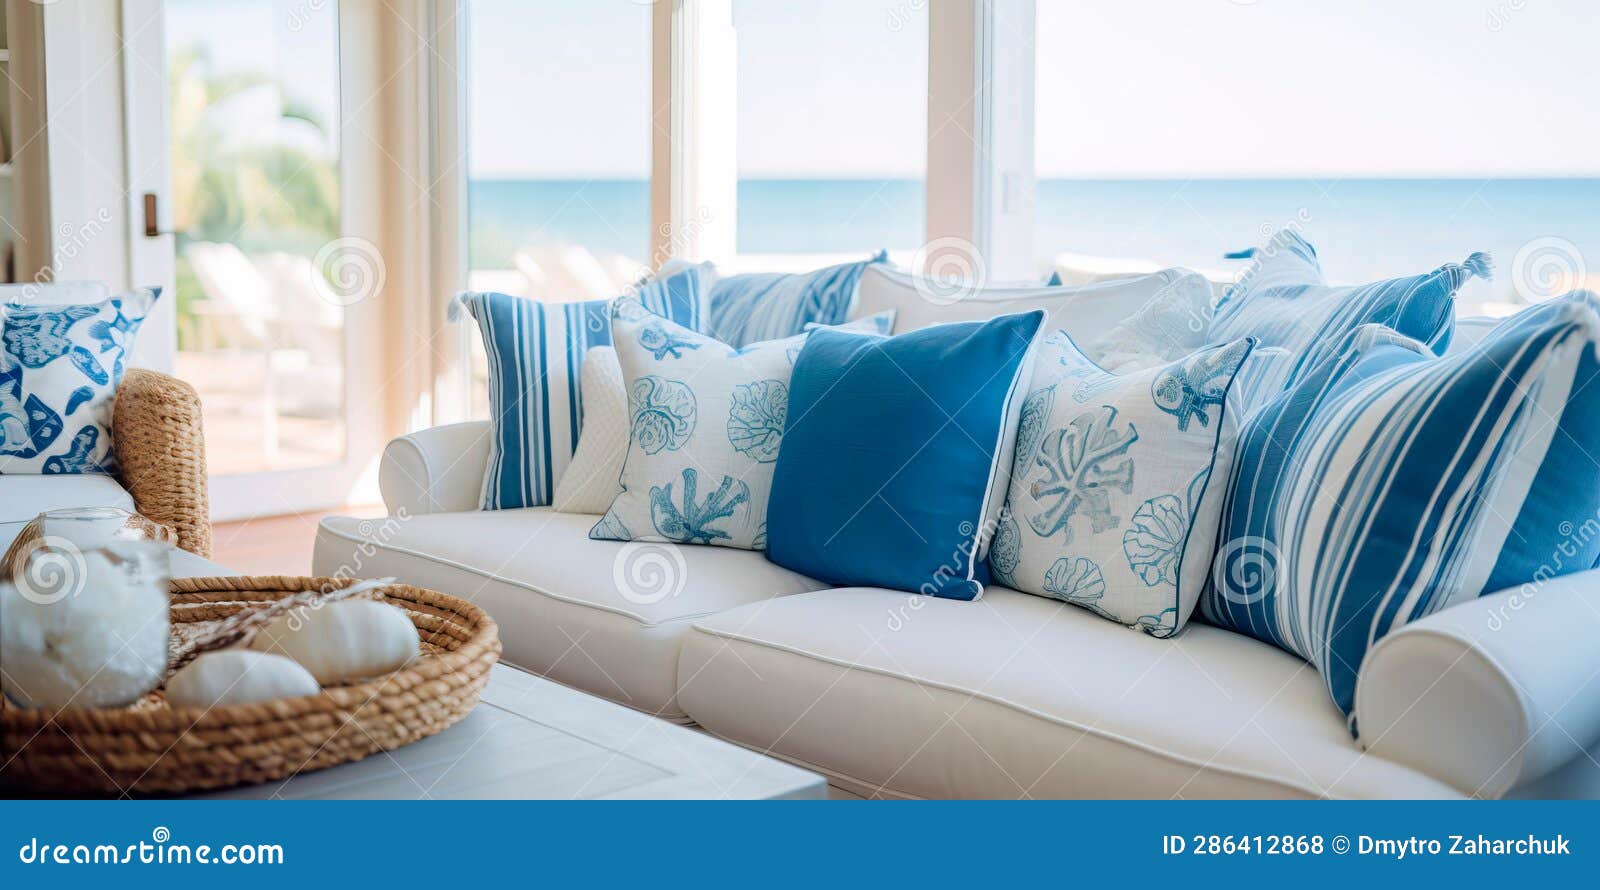 Coastal Beach House Living Room with a Breezy, Nautical Theme and Coastal  Decor Stock Illustration - Illustration of relaxation, seaside: 286412868